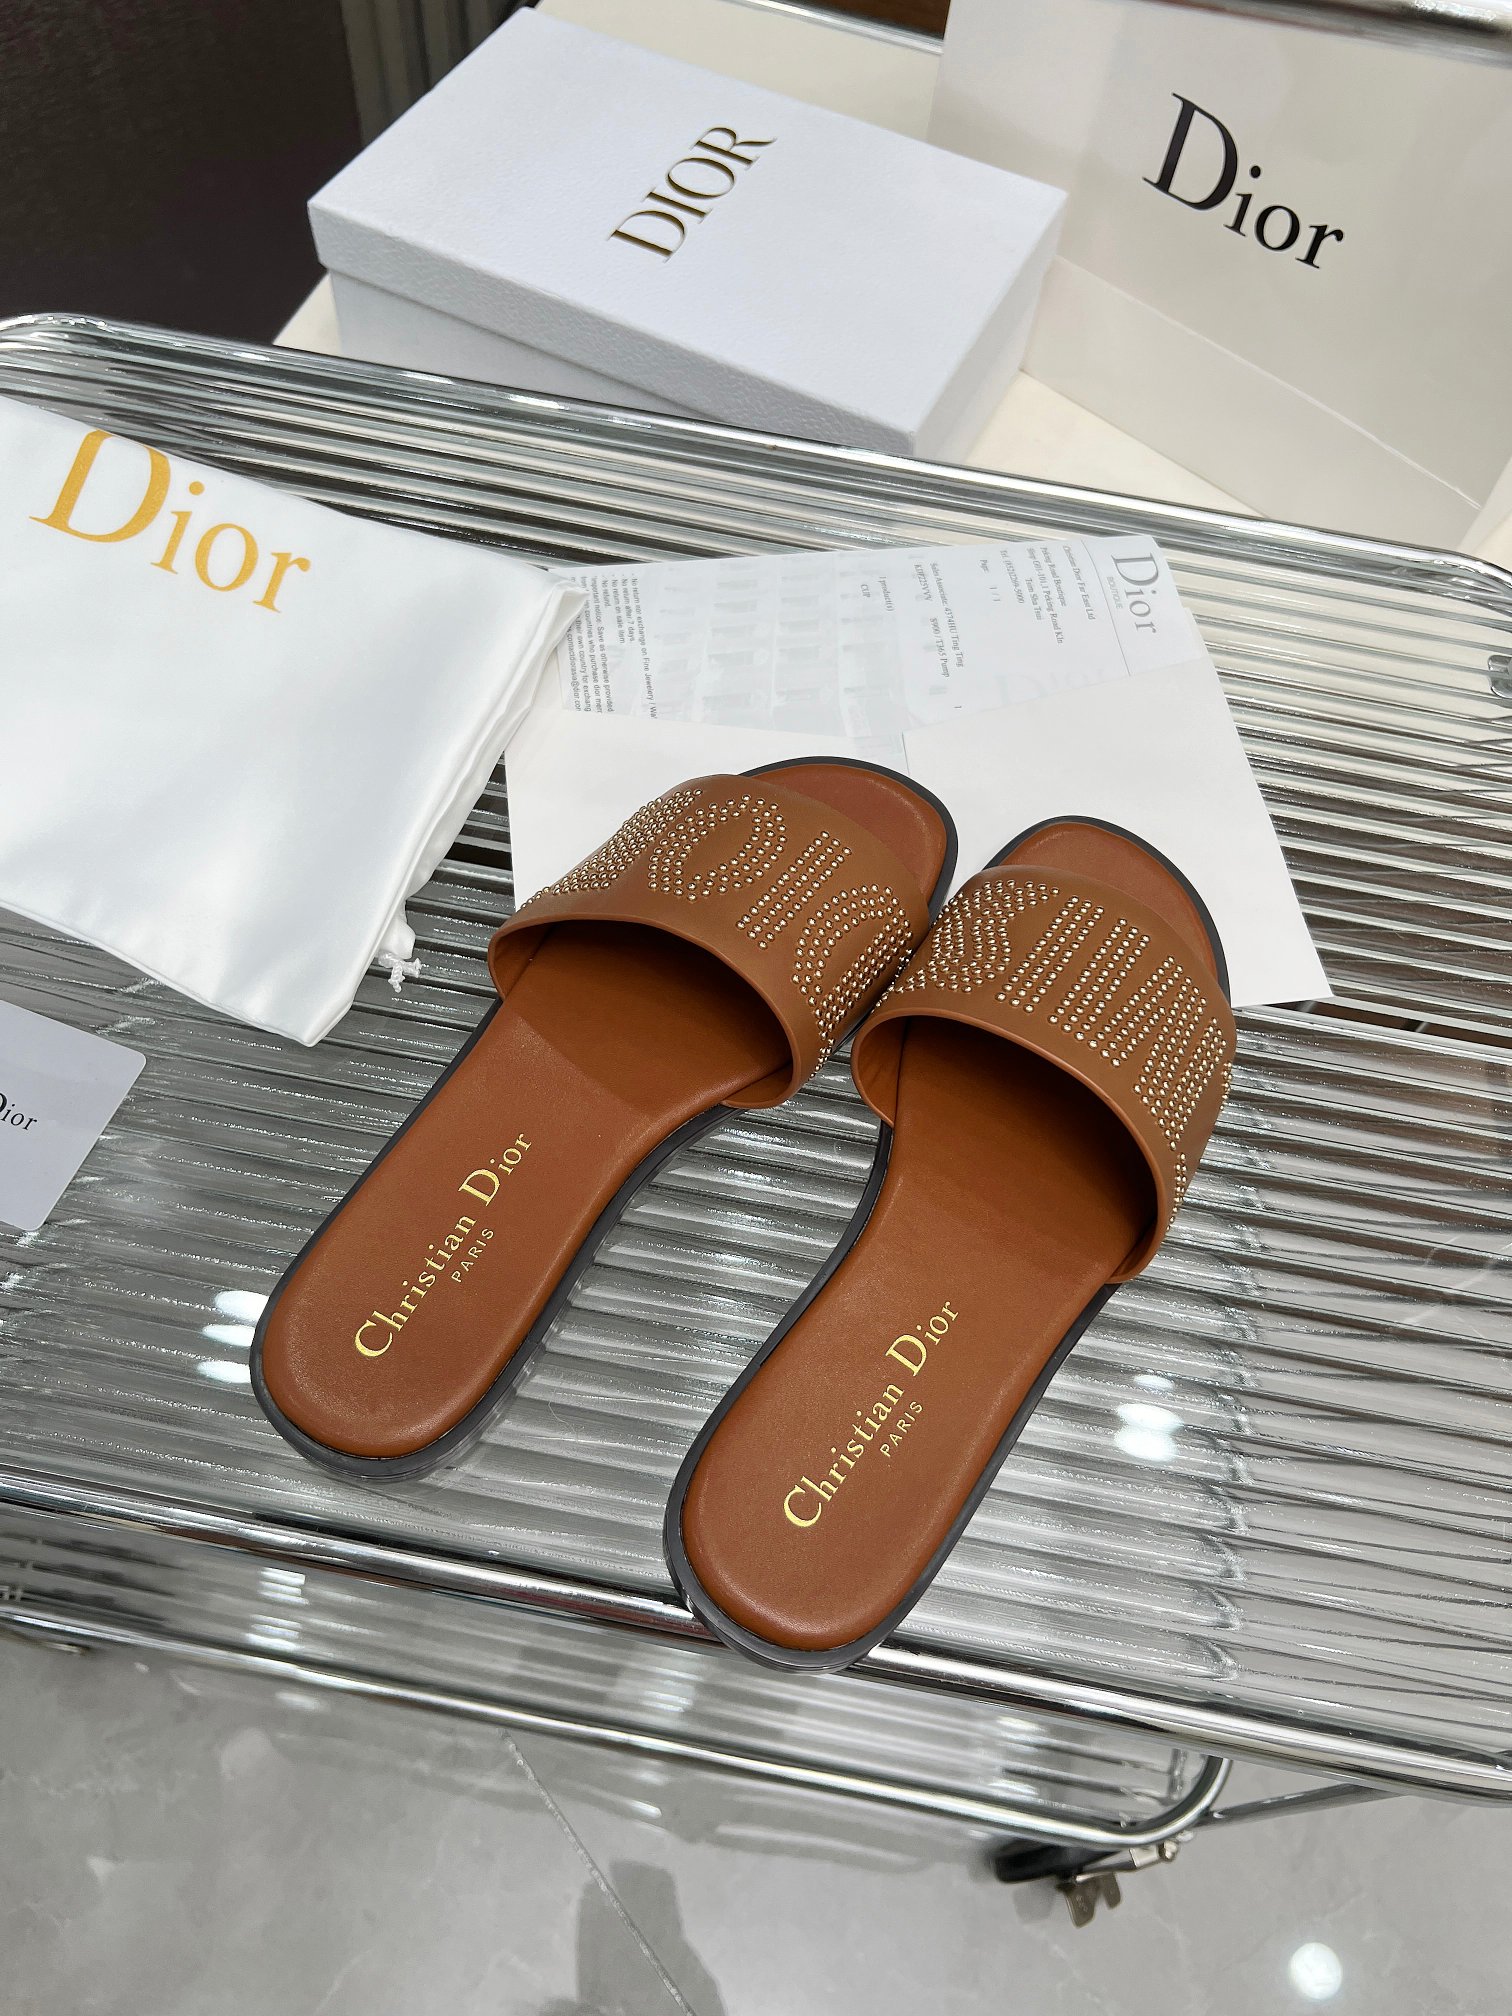 Dior Schuhe Badelatschen Frühling/Sommer Kollektion